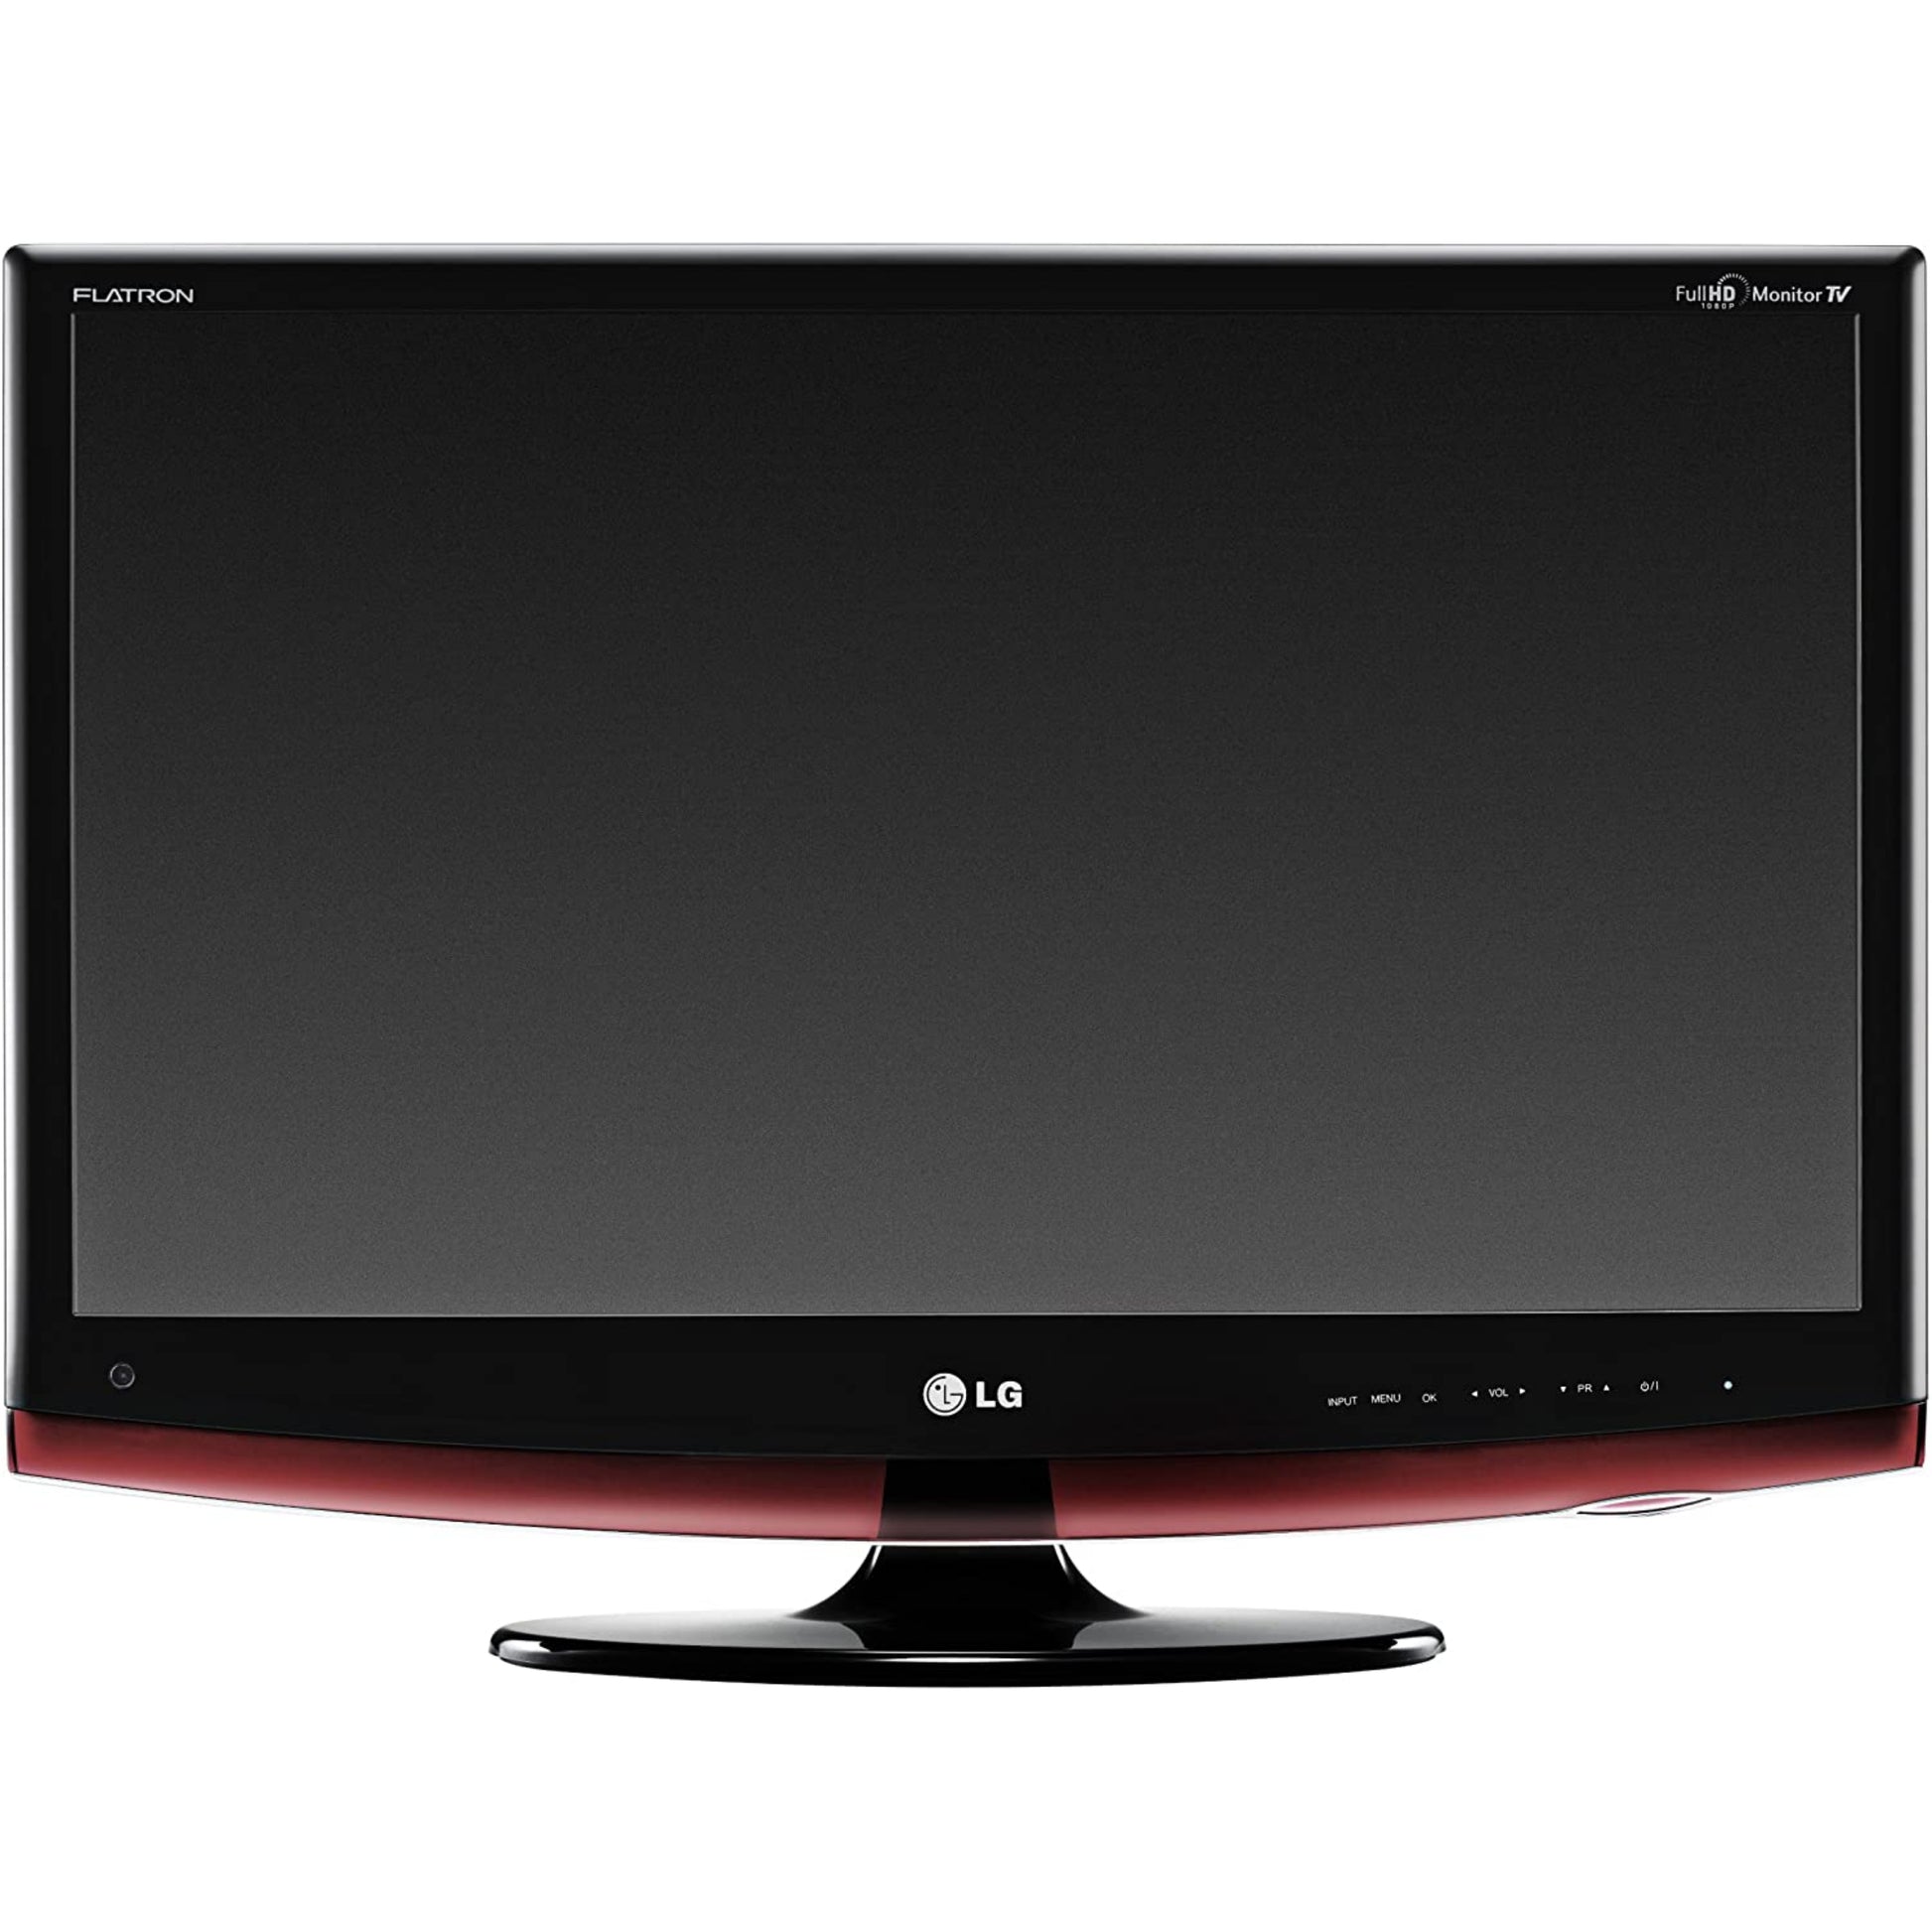 LG 22 Inch M2262DP LCD TV - London Used